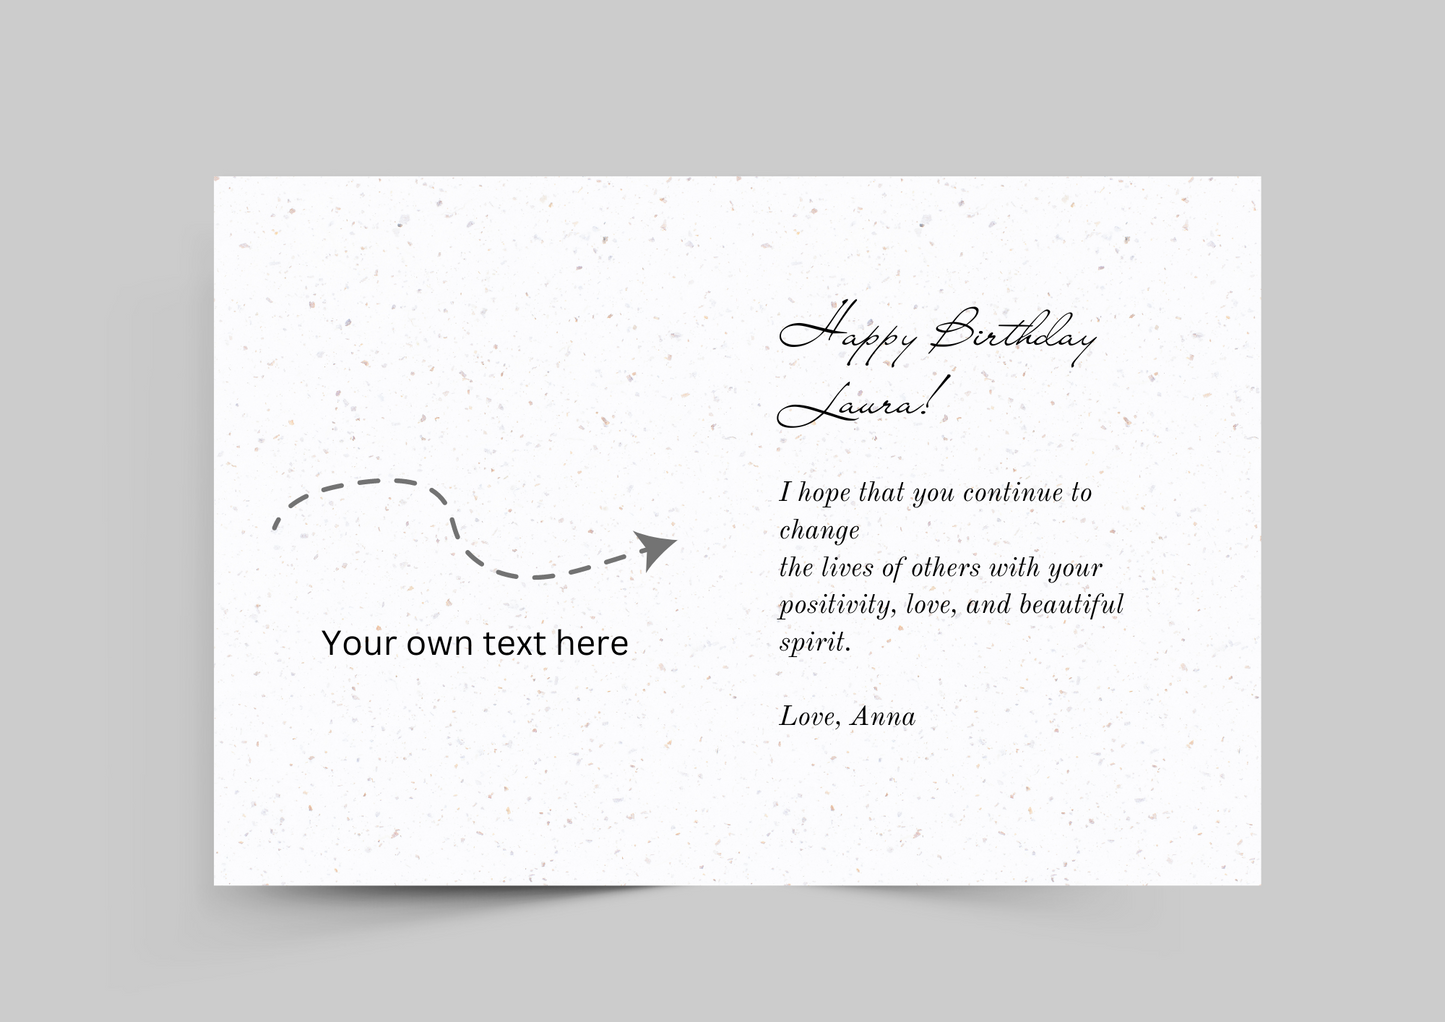 Sending Hugs 2  - Personalized Seed Paper Greeting Card